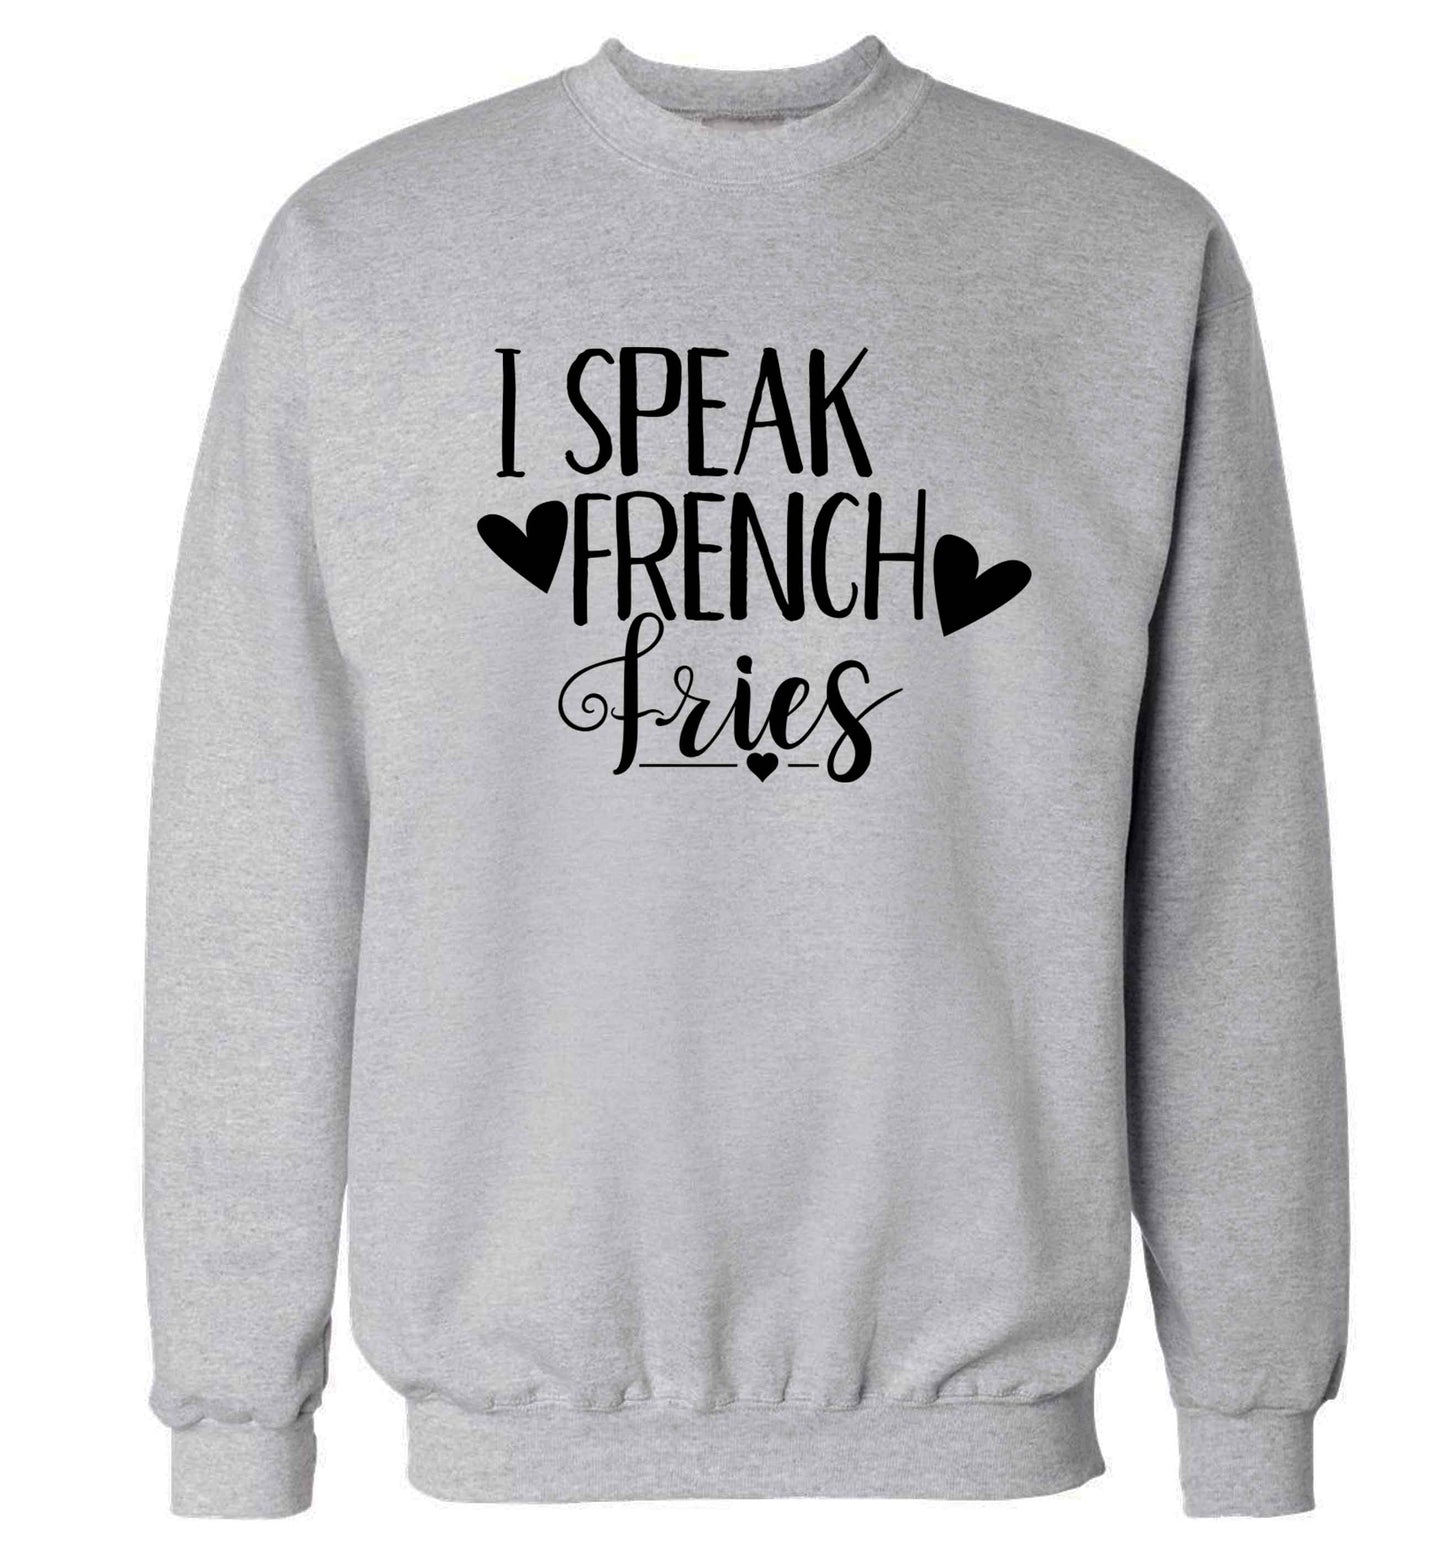 I speak French fries Adult's unisex grey Sweater 2XL